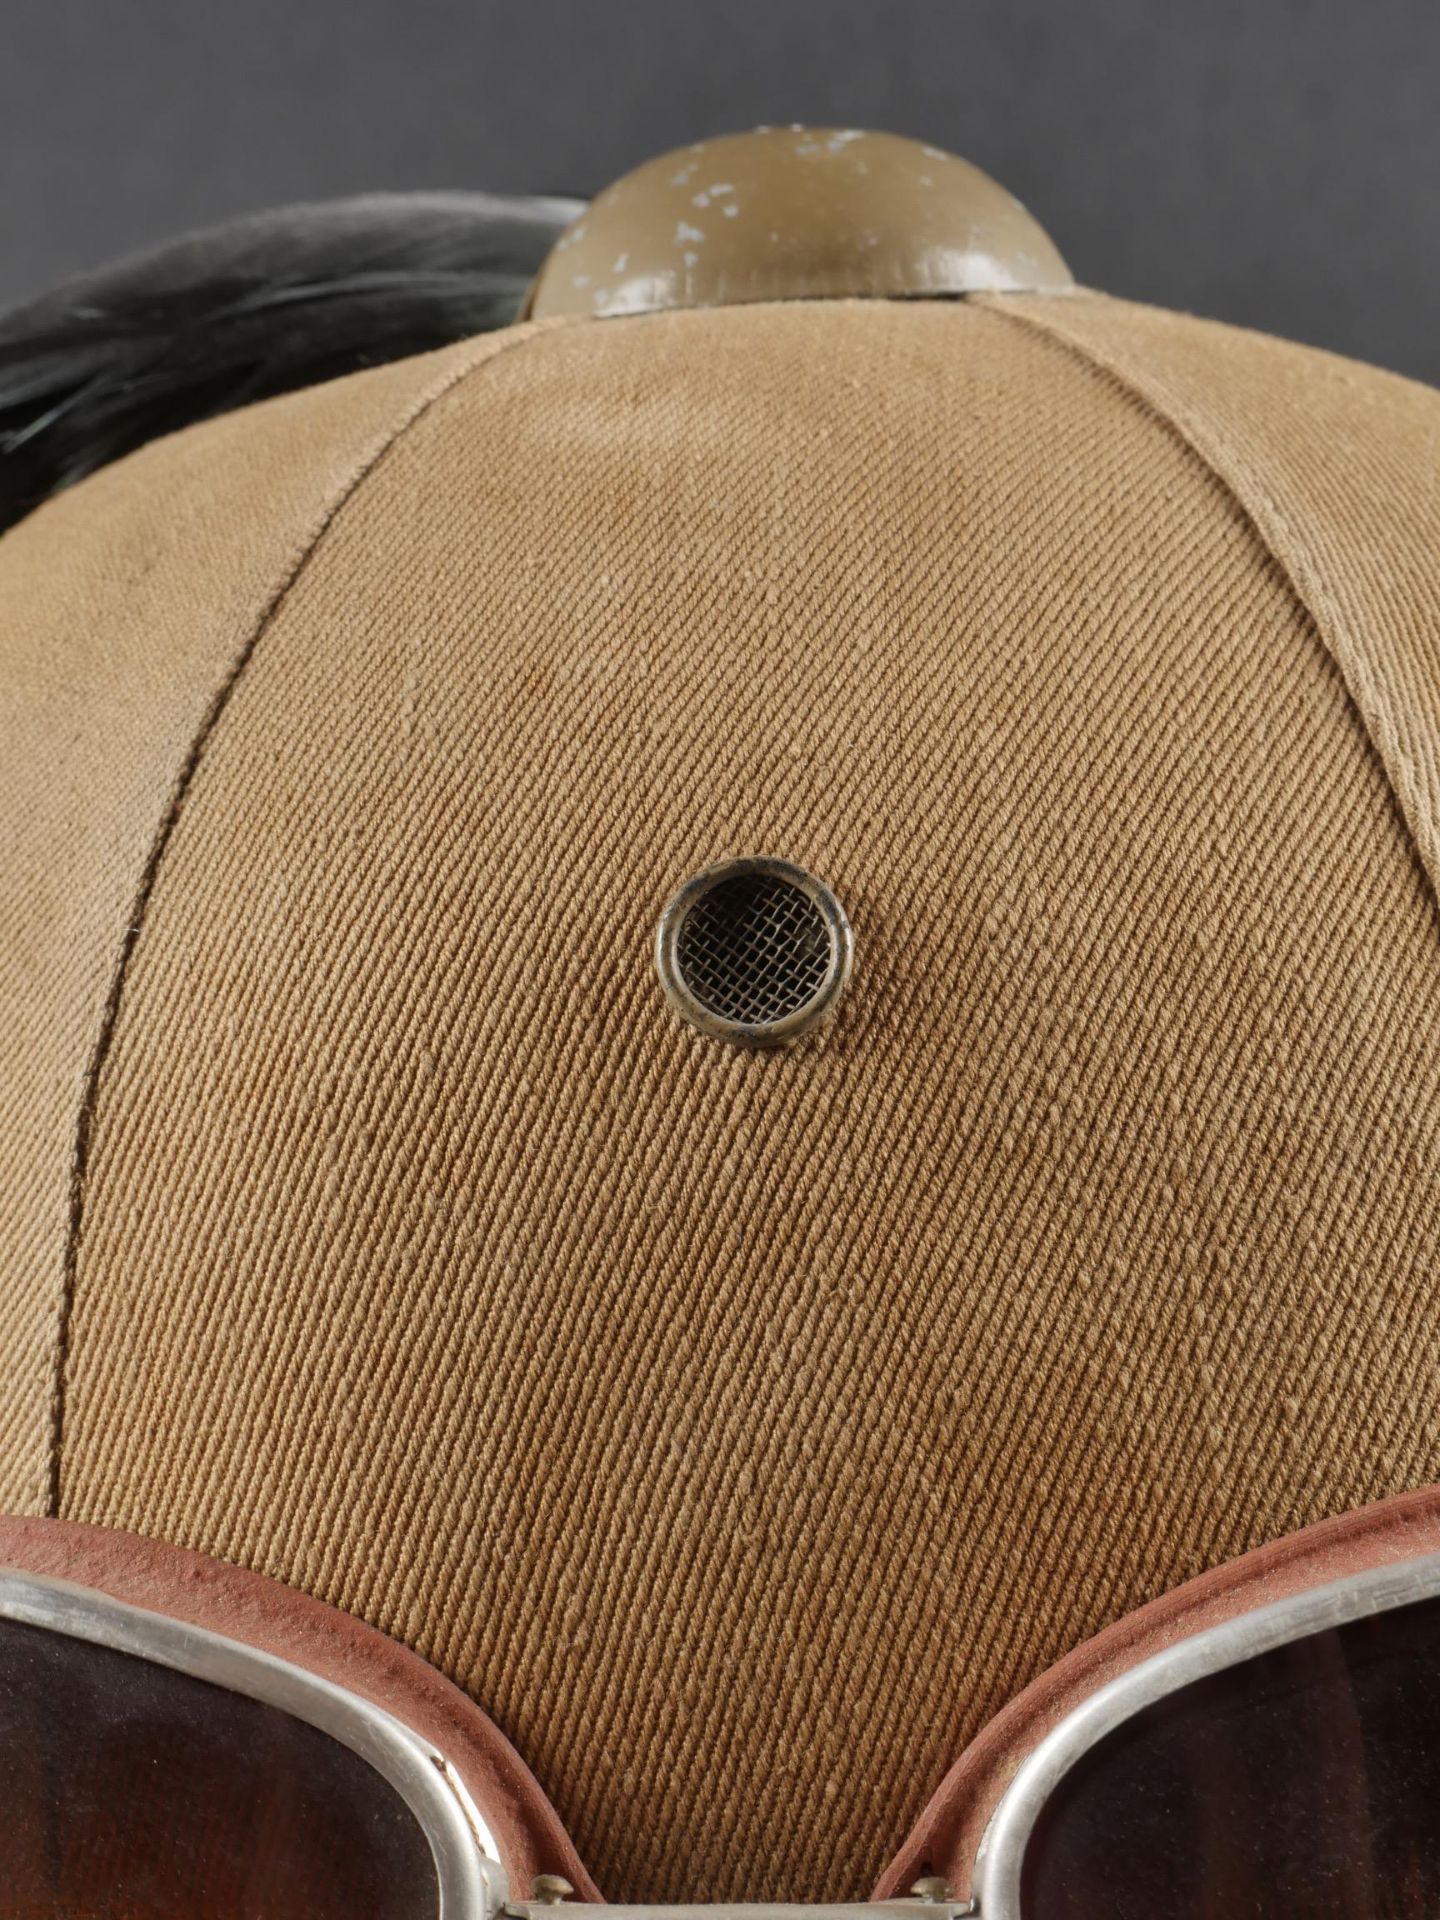 Casque tropicale du 8eme Regiment Bersaglieri. Tropical helmet of the 8th Bersaglieri Regiment. - Bild 6 aus 19